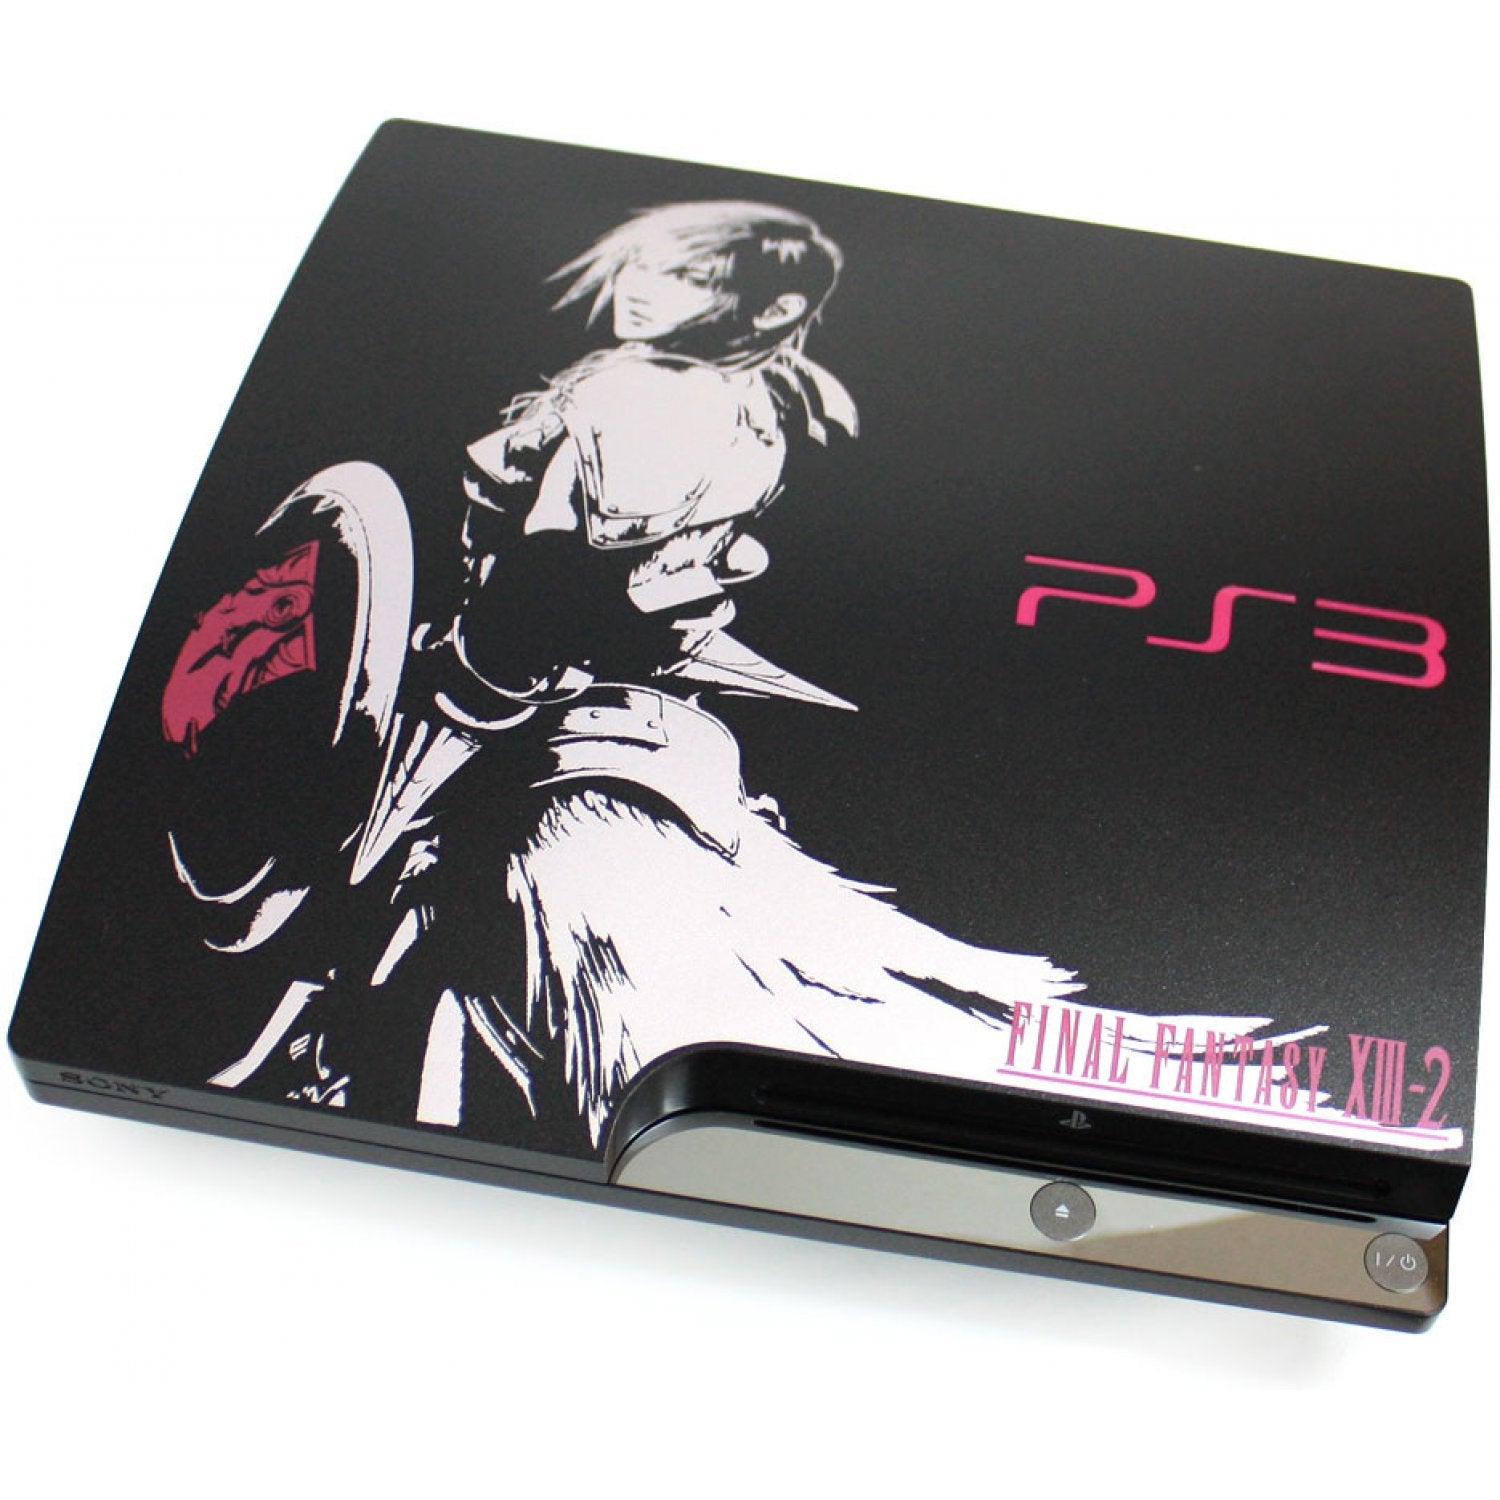 Sony Playstation 3 (PS3) Slim Final Fantasy XIII-2 (13-2